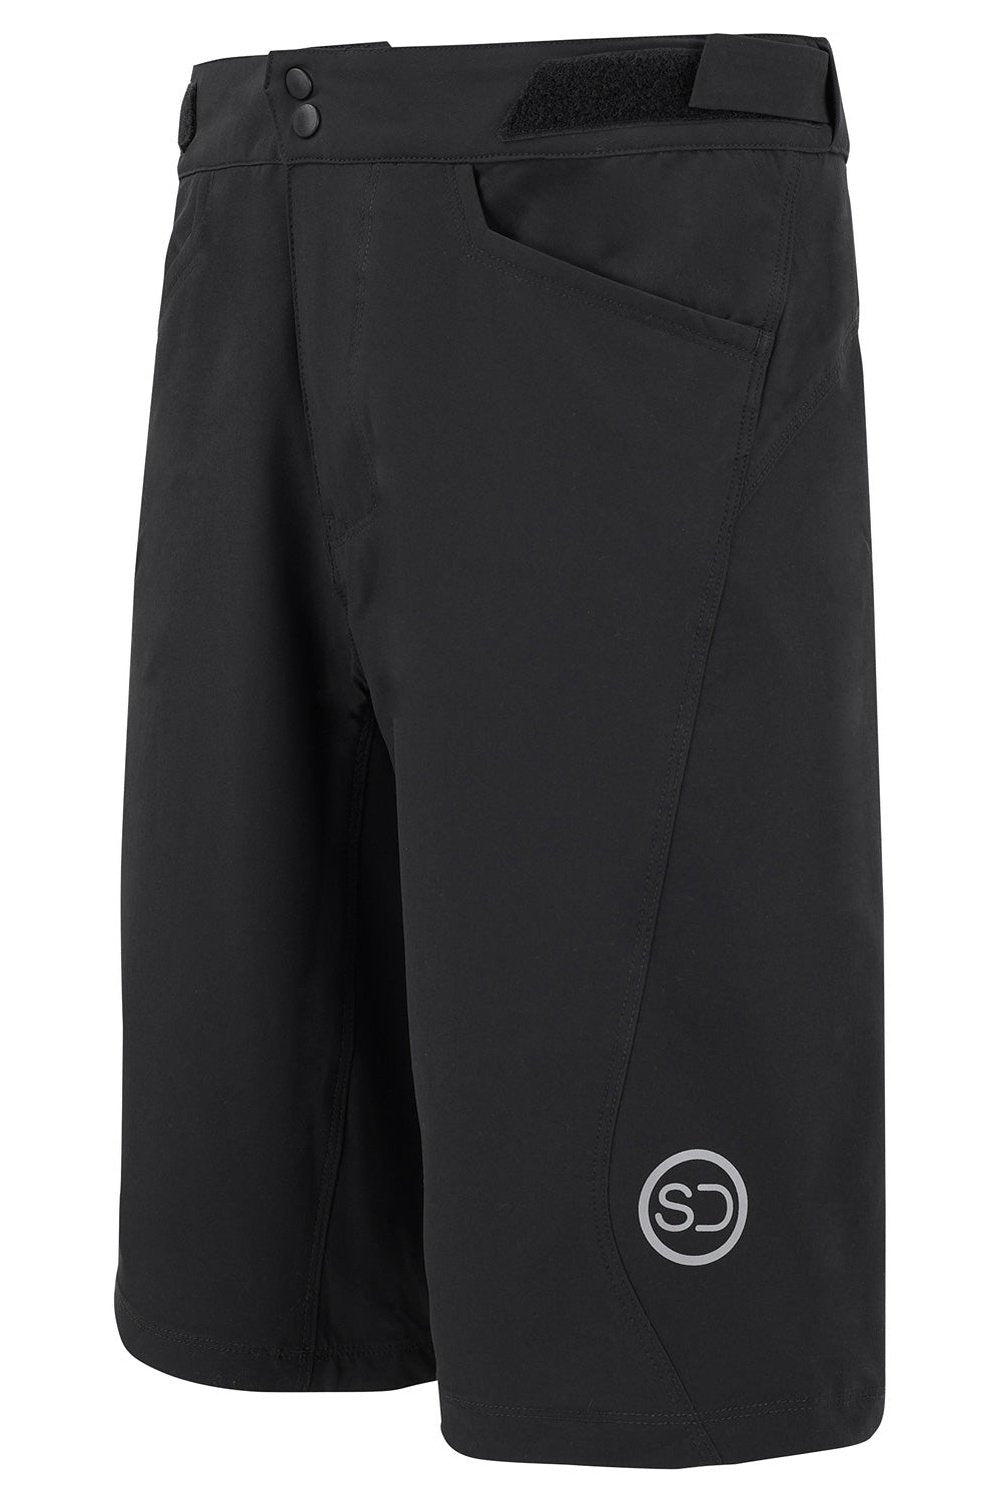 Sundried Huron Men's Mountain Bike Shorts Shorts XS Black SD0363 XS Black Activewear